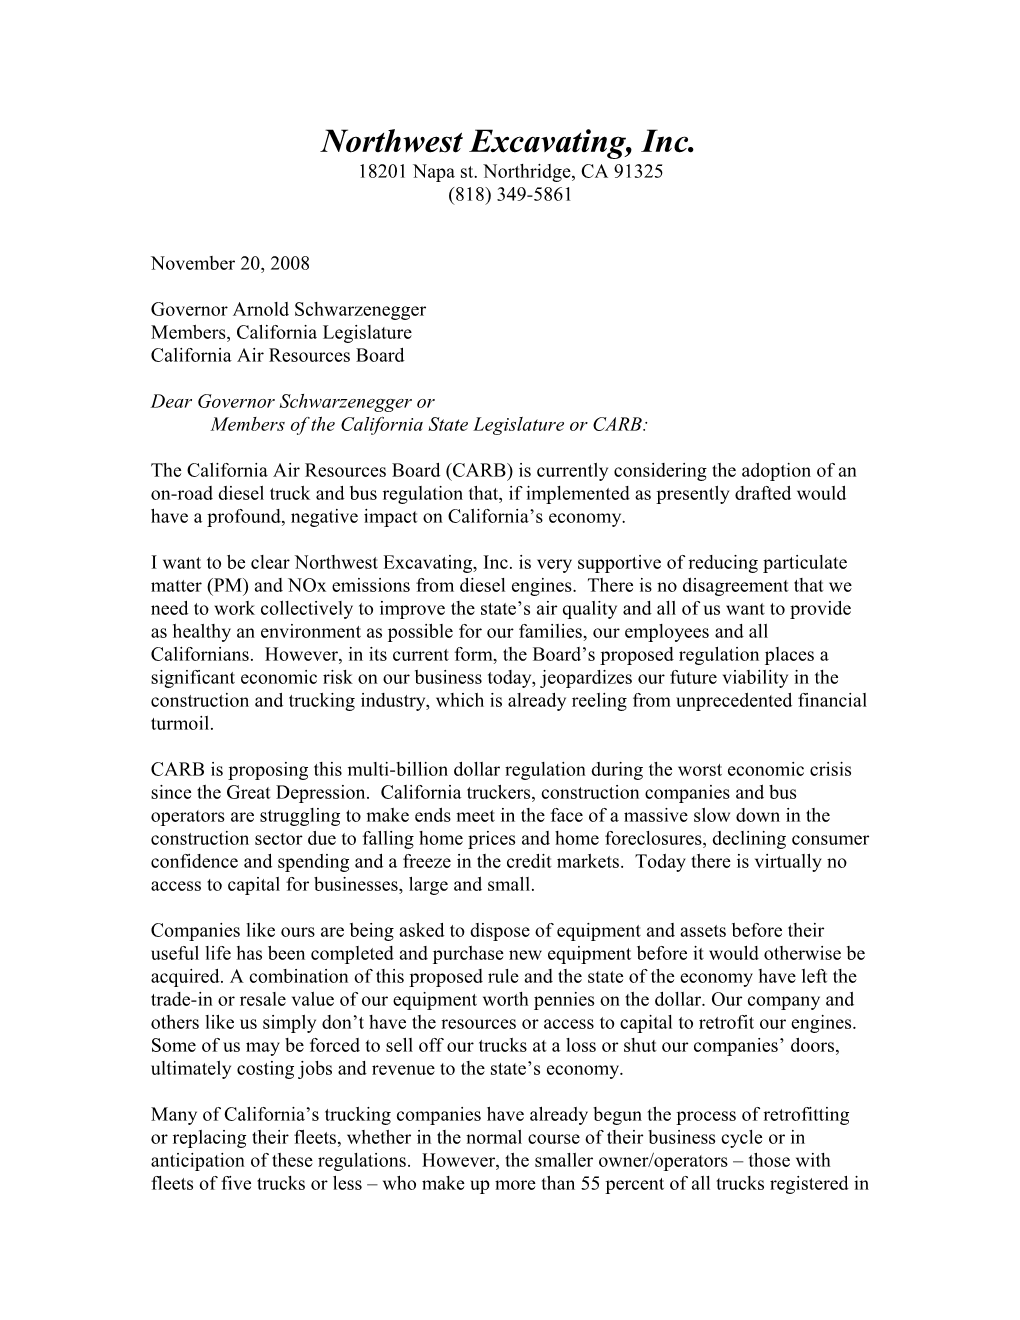 Sample Letter to Governor Schwarzenegger, Carb & Legislators